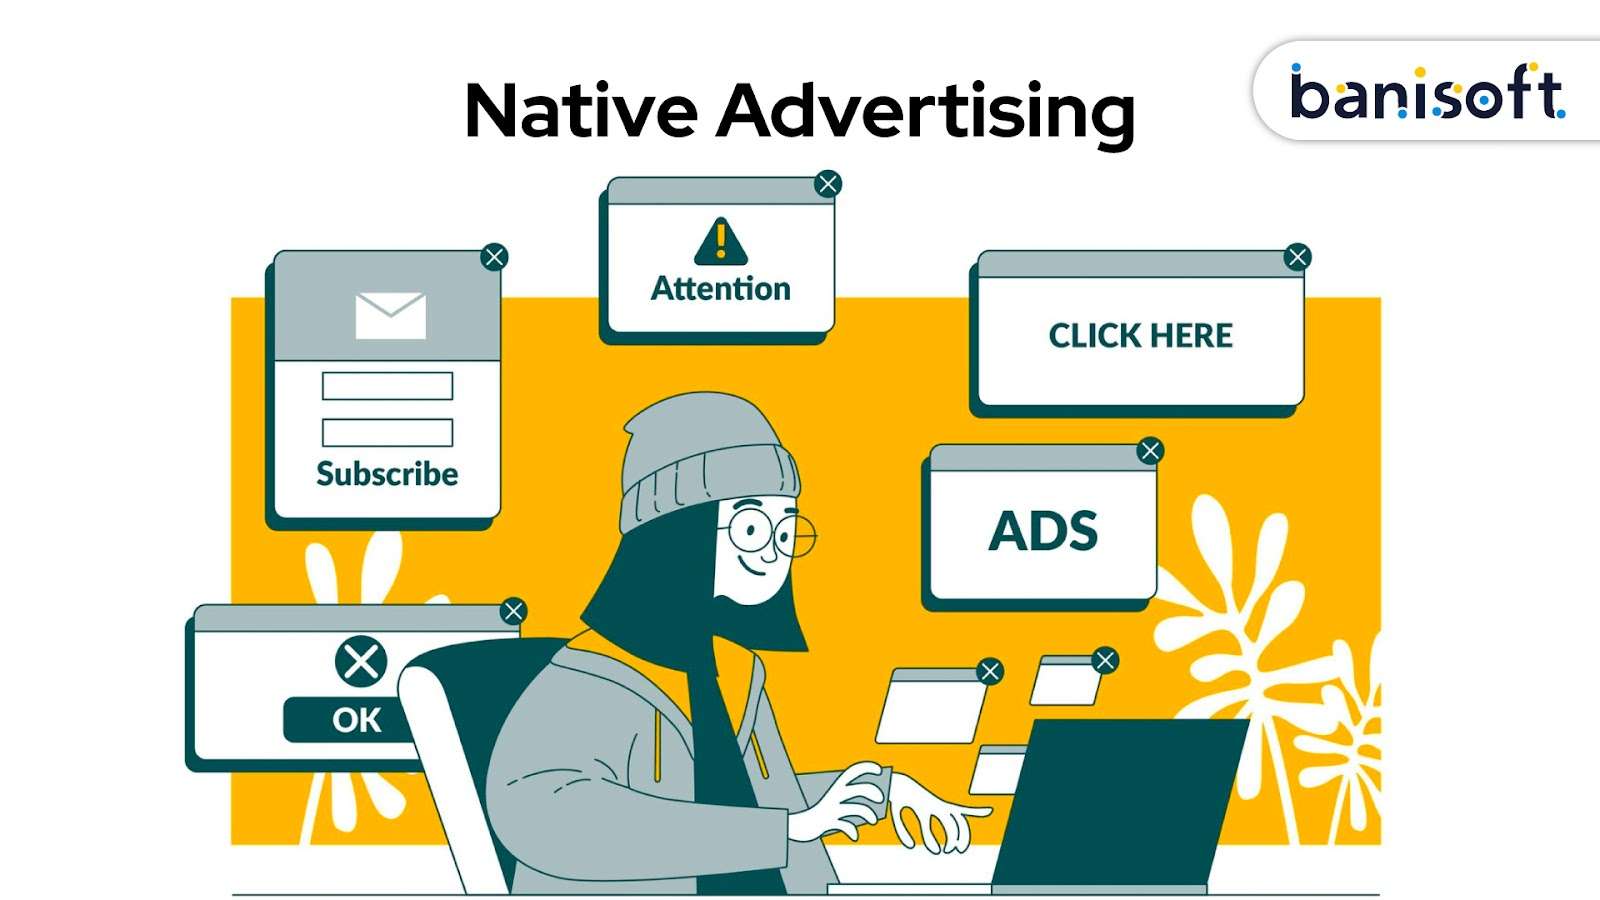 banisoft native advertising ads